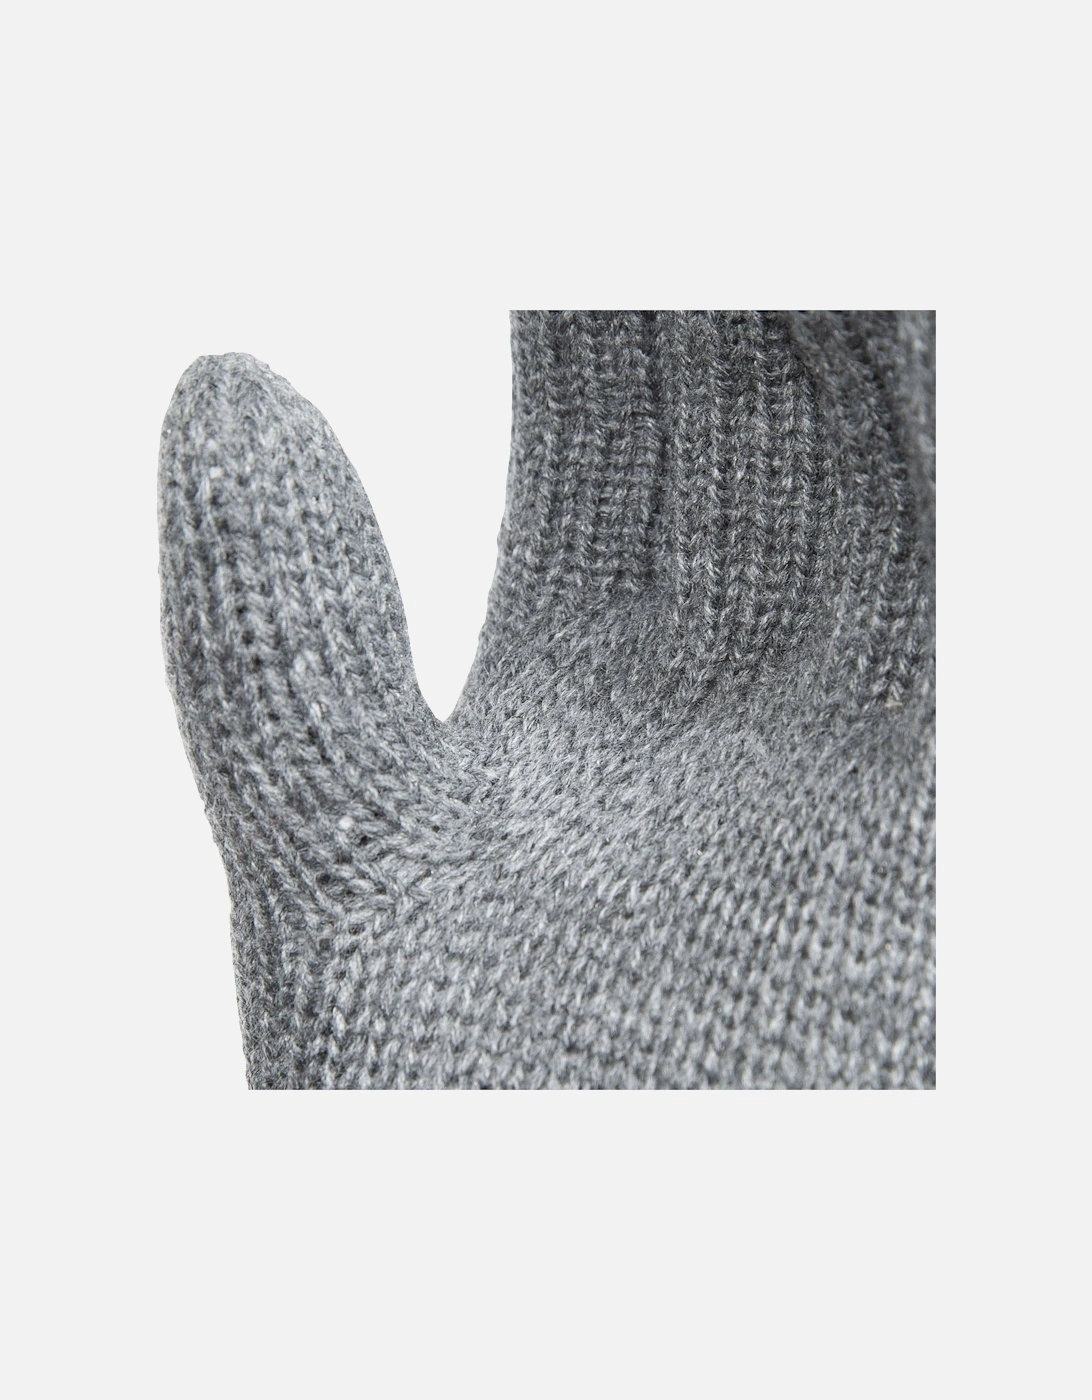 Kids Bargo Knitted Thinsulate Gloves - Grey